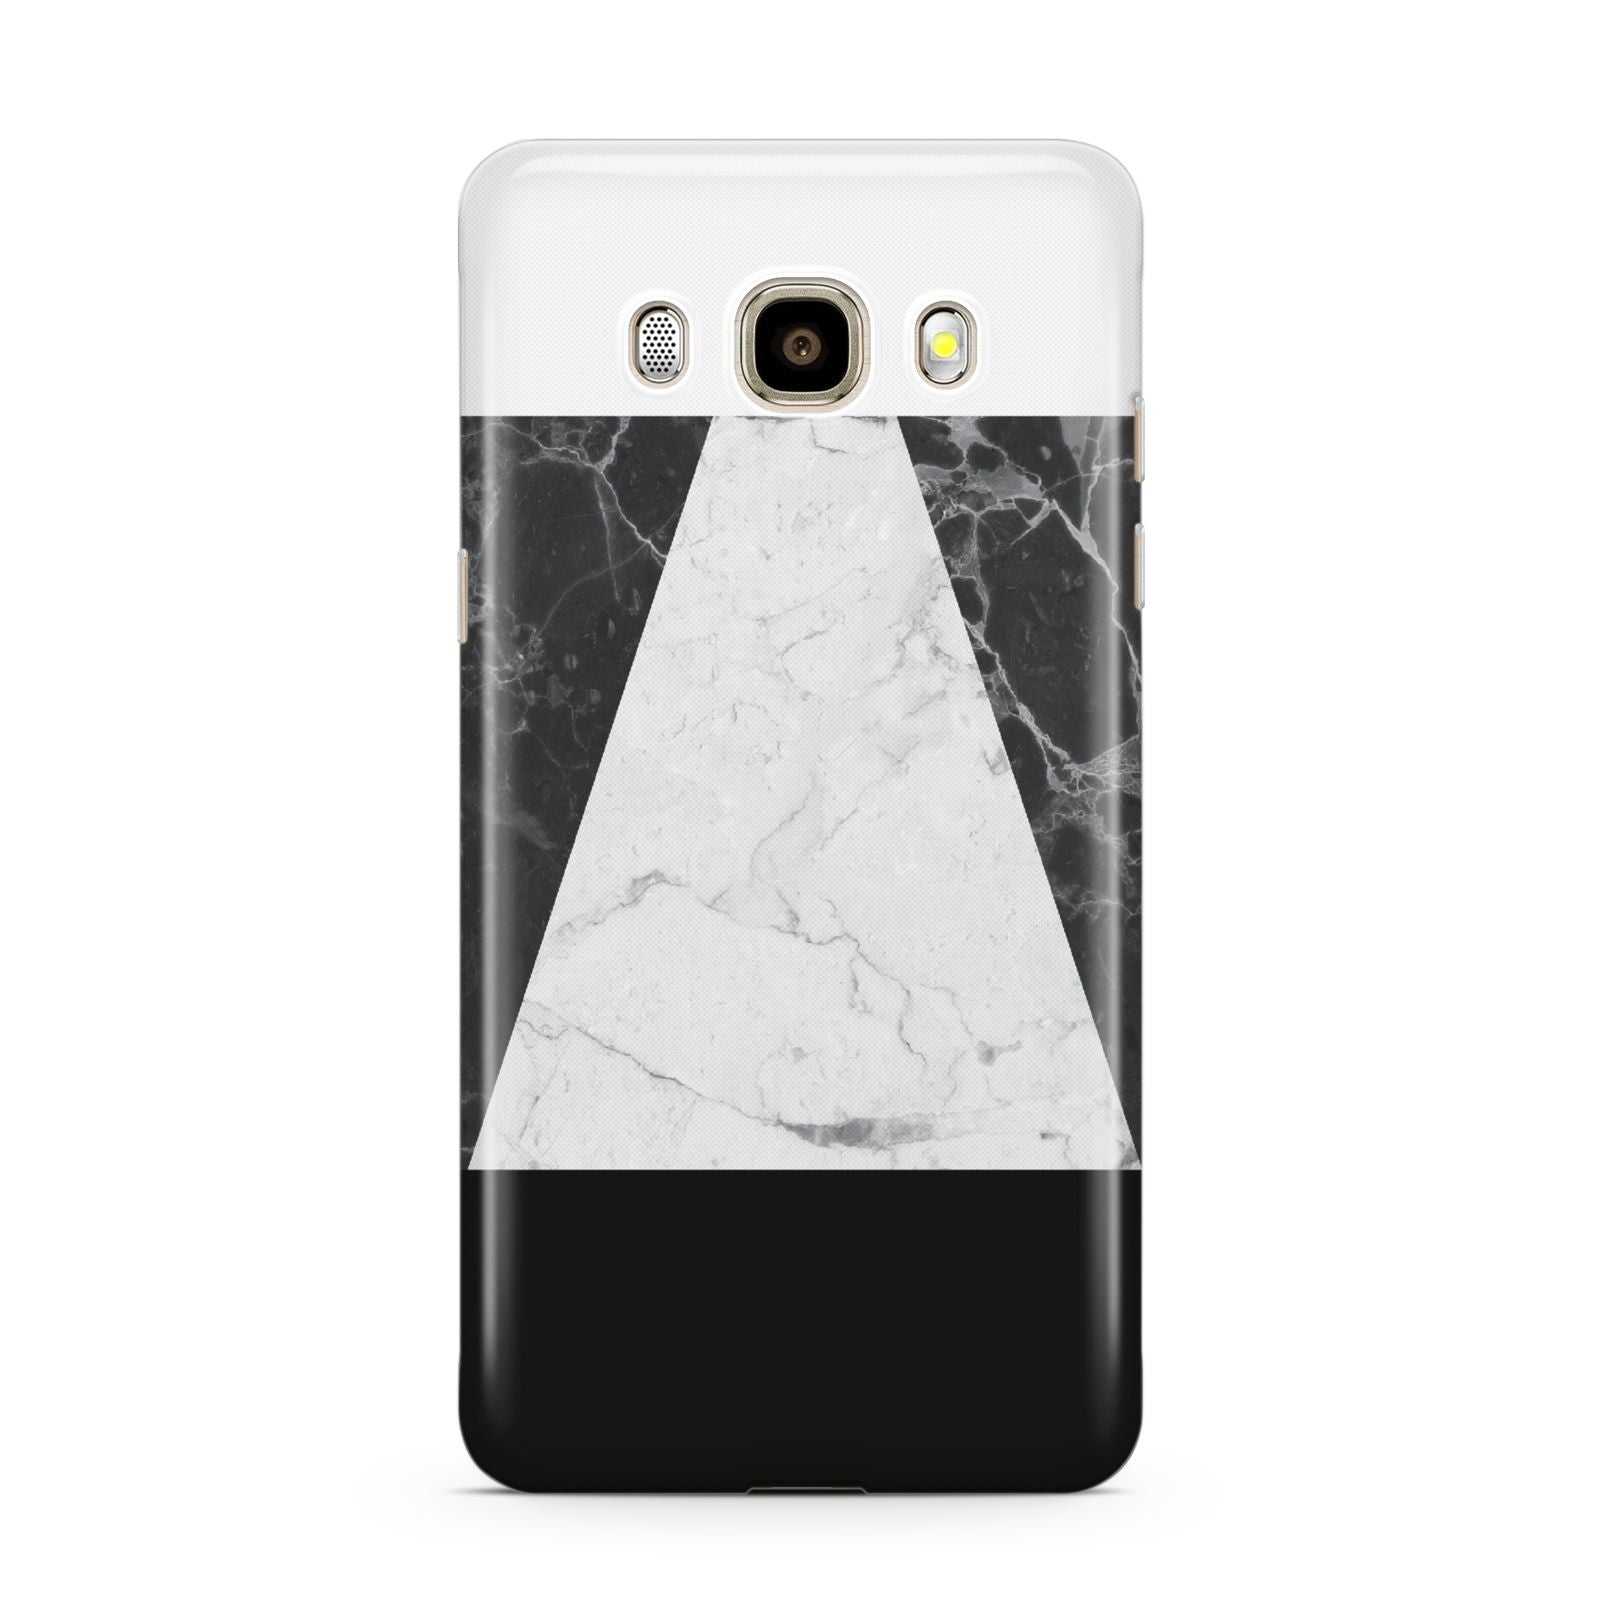 Marble White Black Samsung Galaxy J7 2016 Case on gold phone